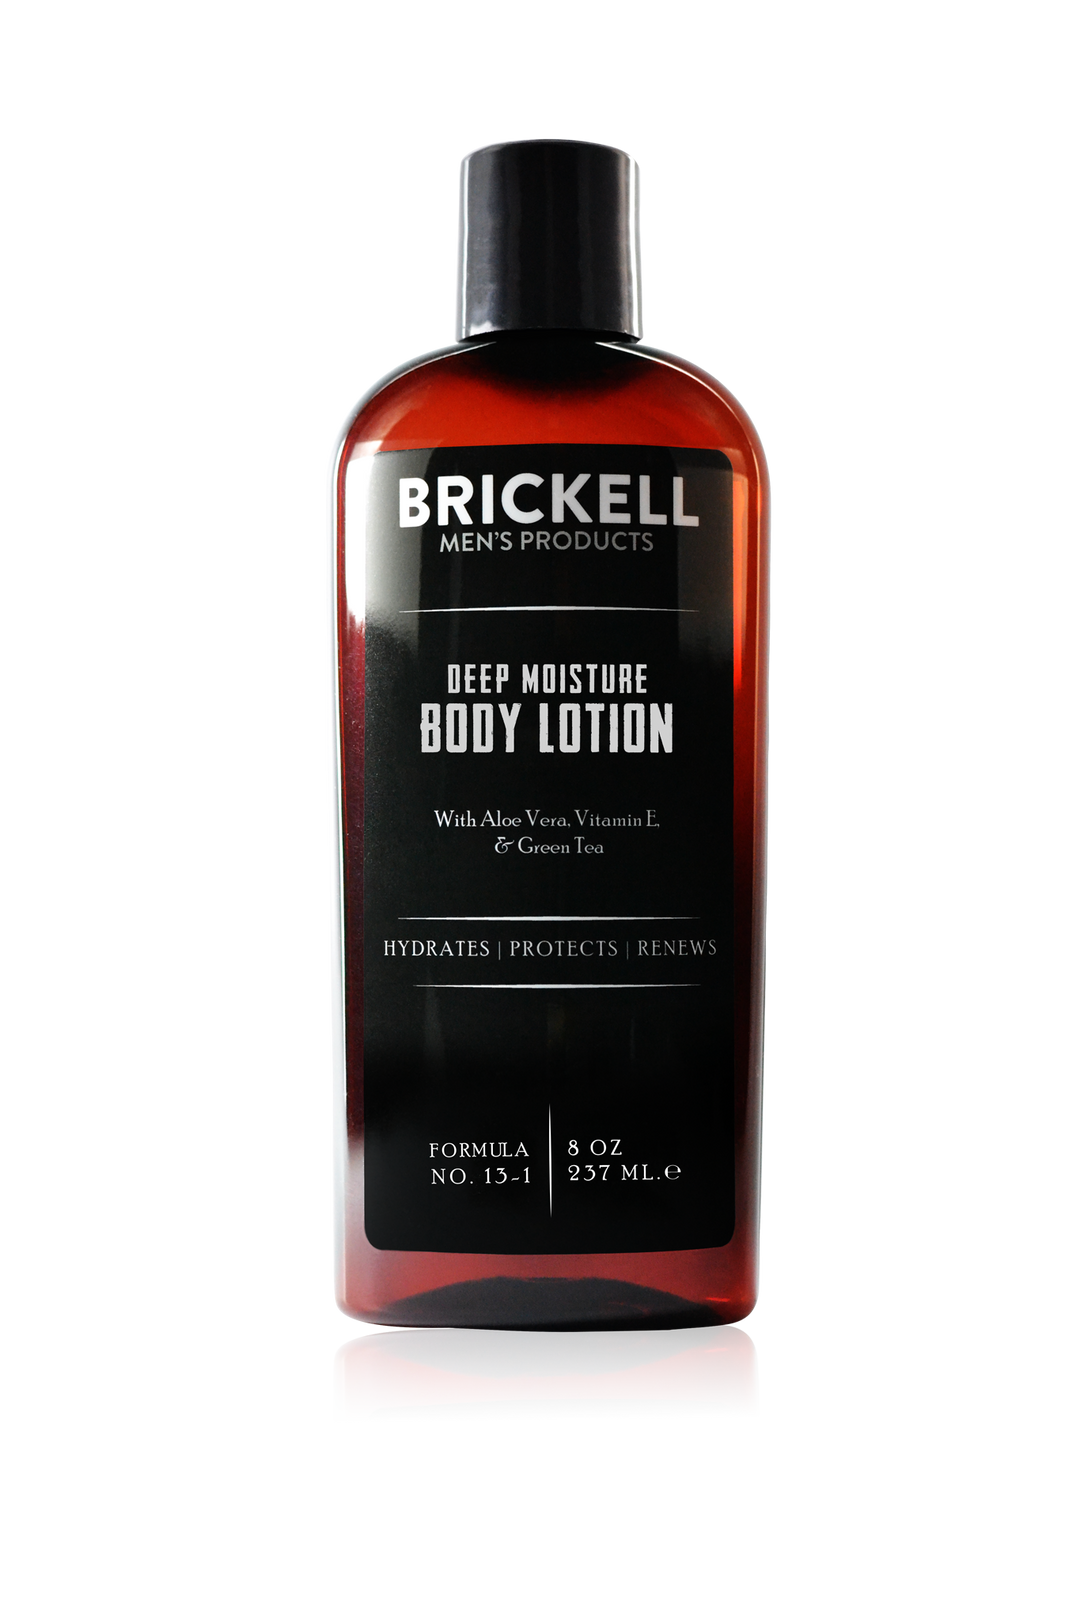 Brickell Men's Products Deep Moisture Body Lotion